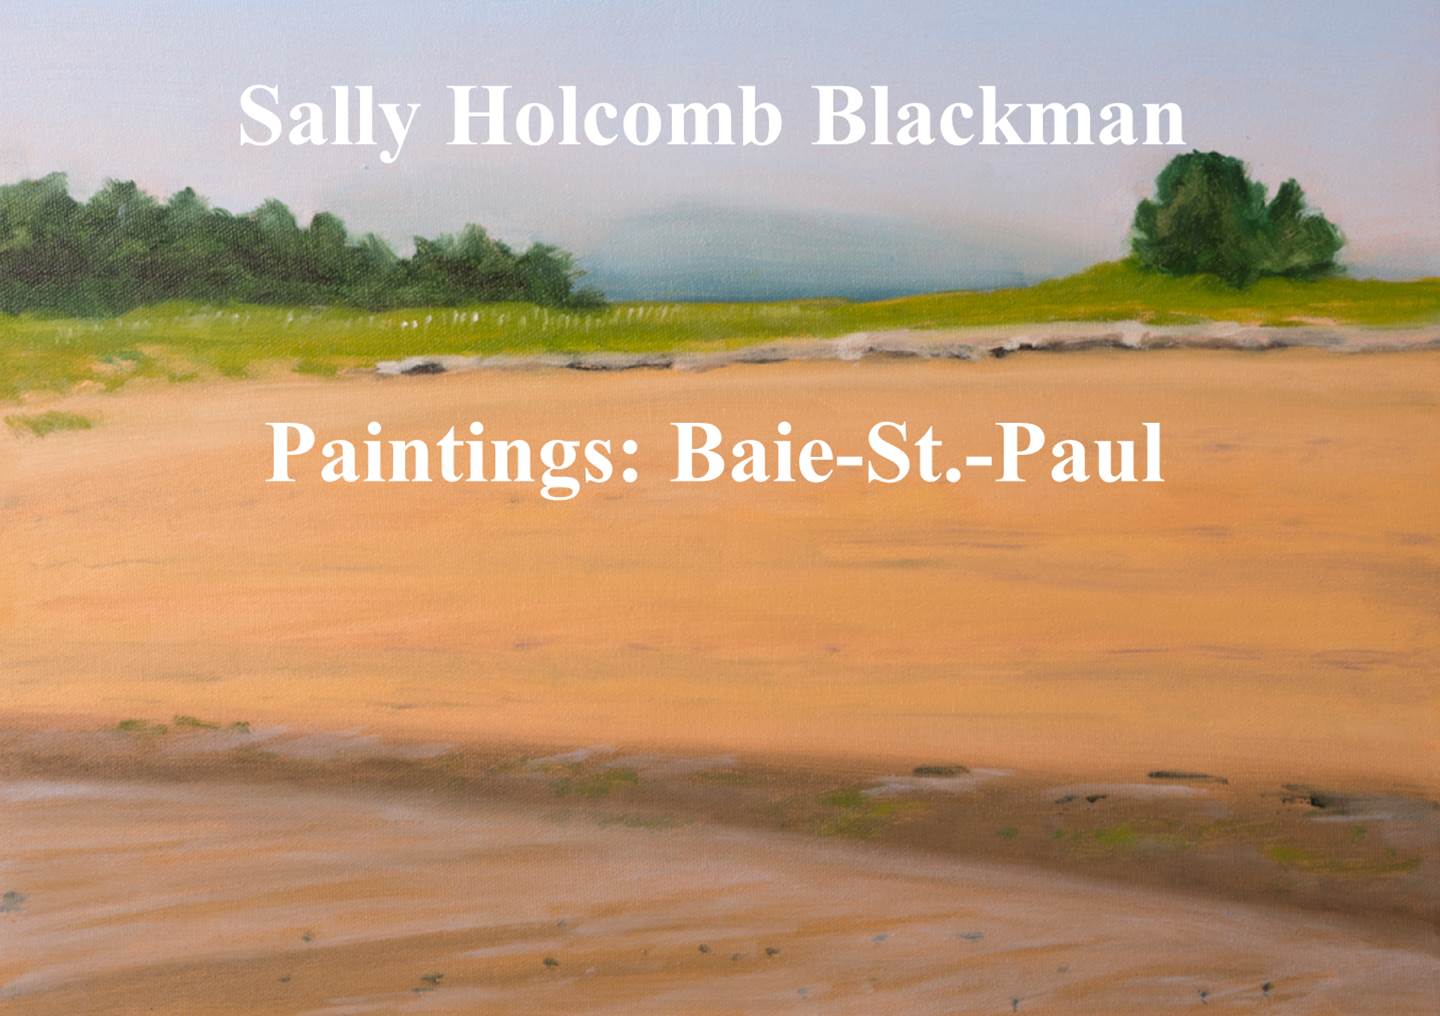 Sally Holcomb Blackman: Baie-St.-Paul June 22 – July 2